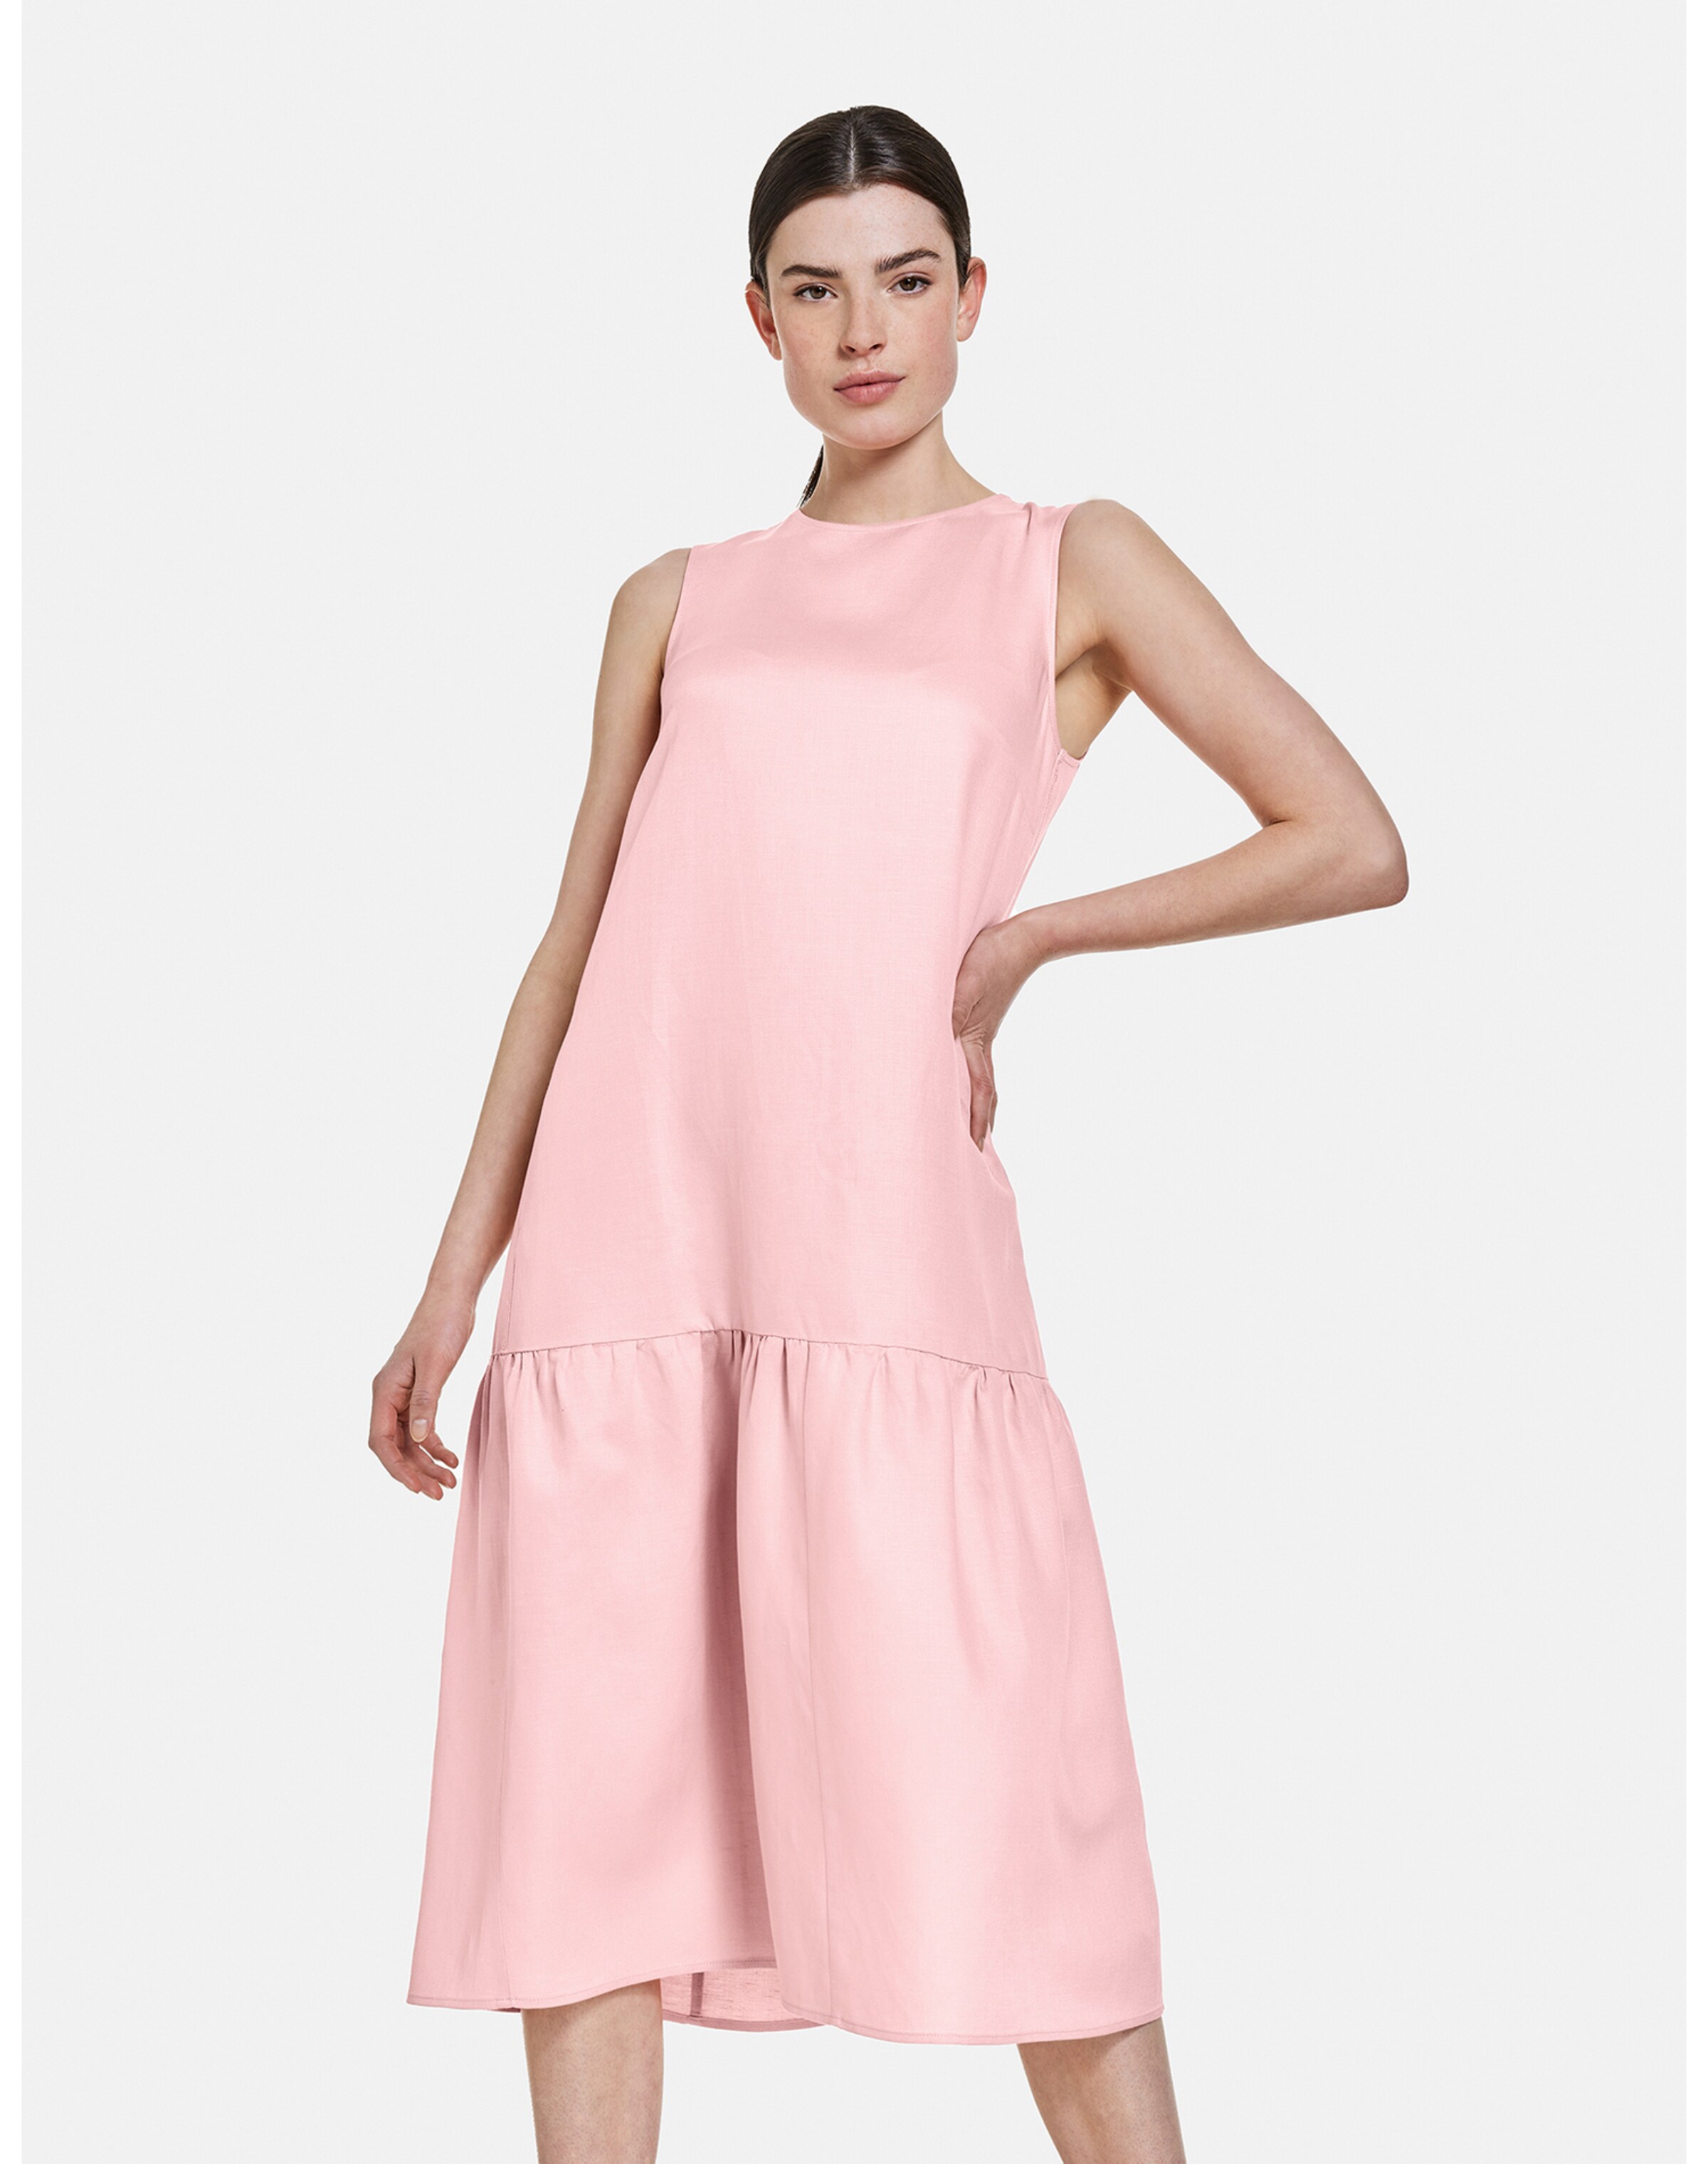 Frauen Große Größen TAIFUN Kleid in Rosa - DJ41155